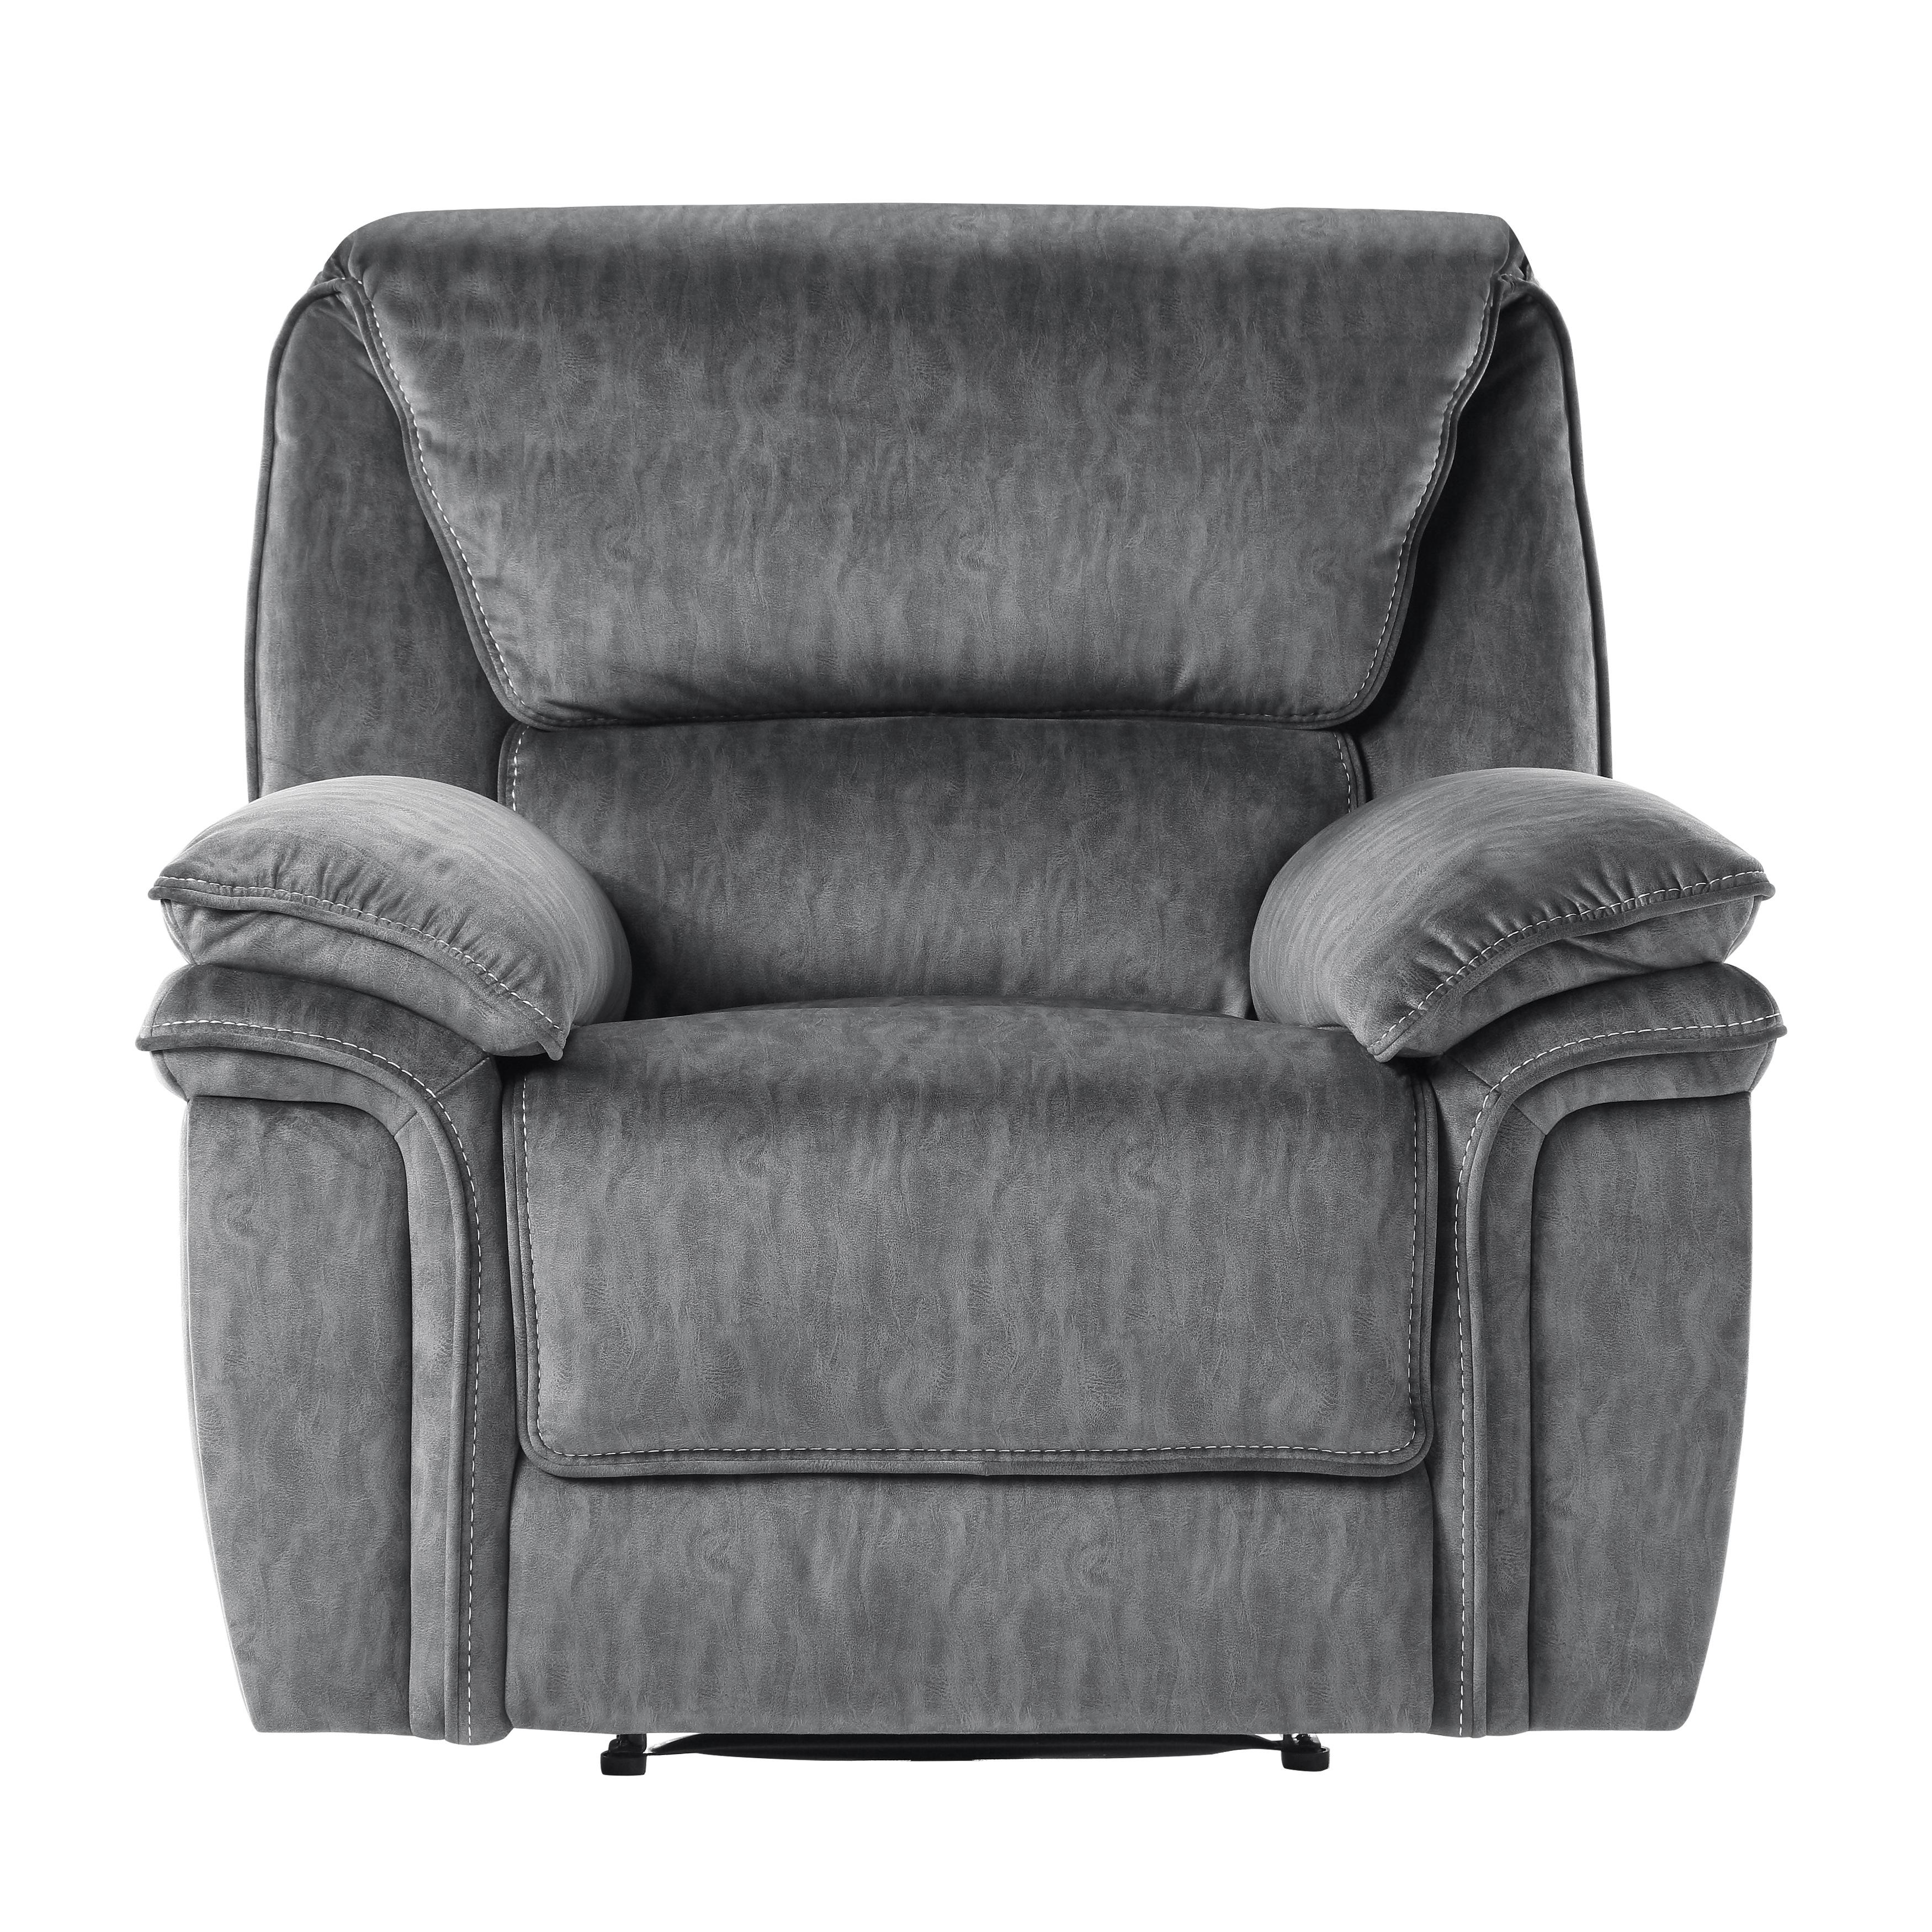 Modern Reclining Chair 9913-1 Muirfield 9913-1 in Gray Microfiber